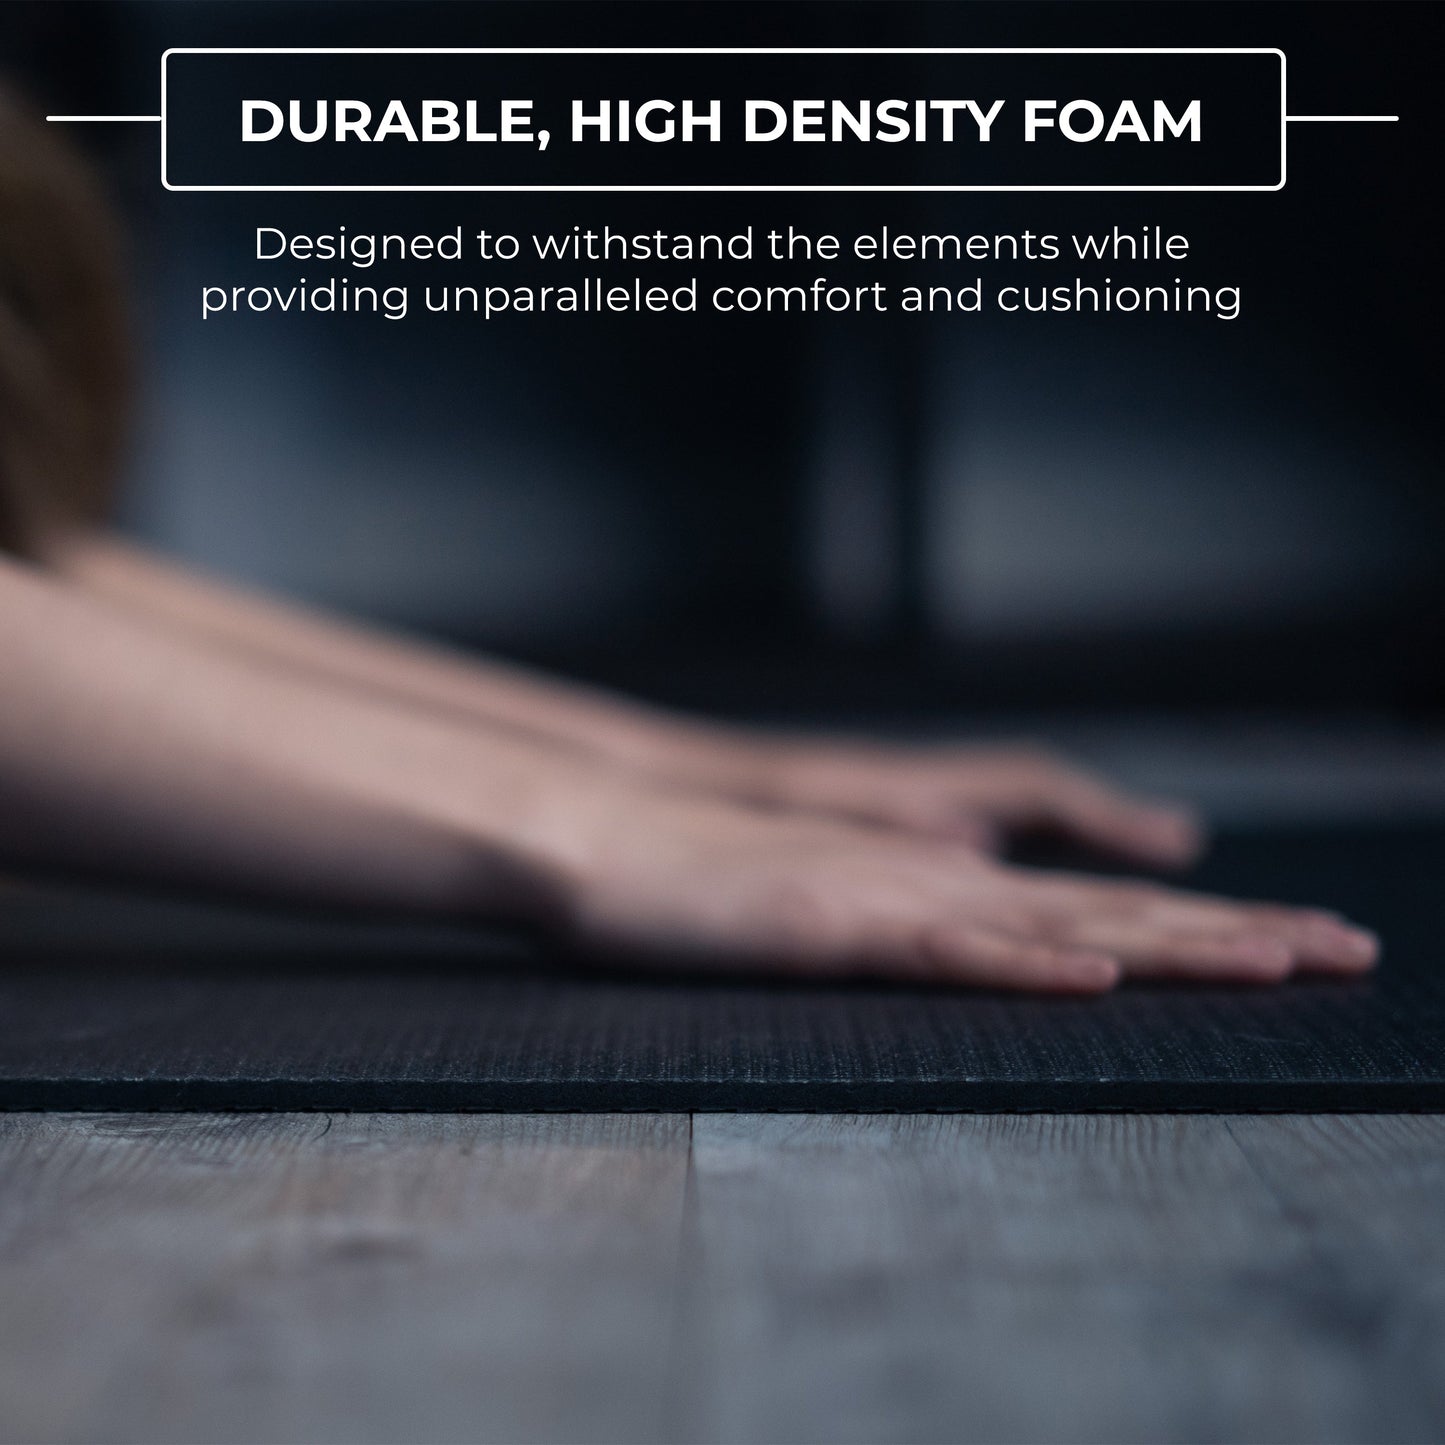 durable and high density foam yoga mat